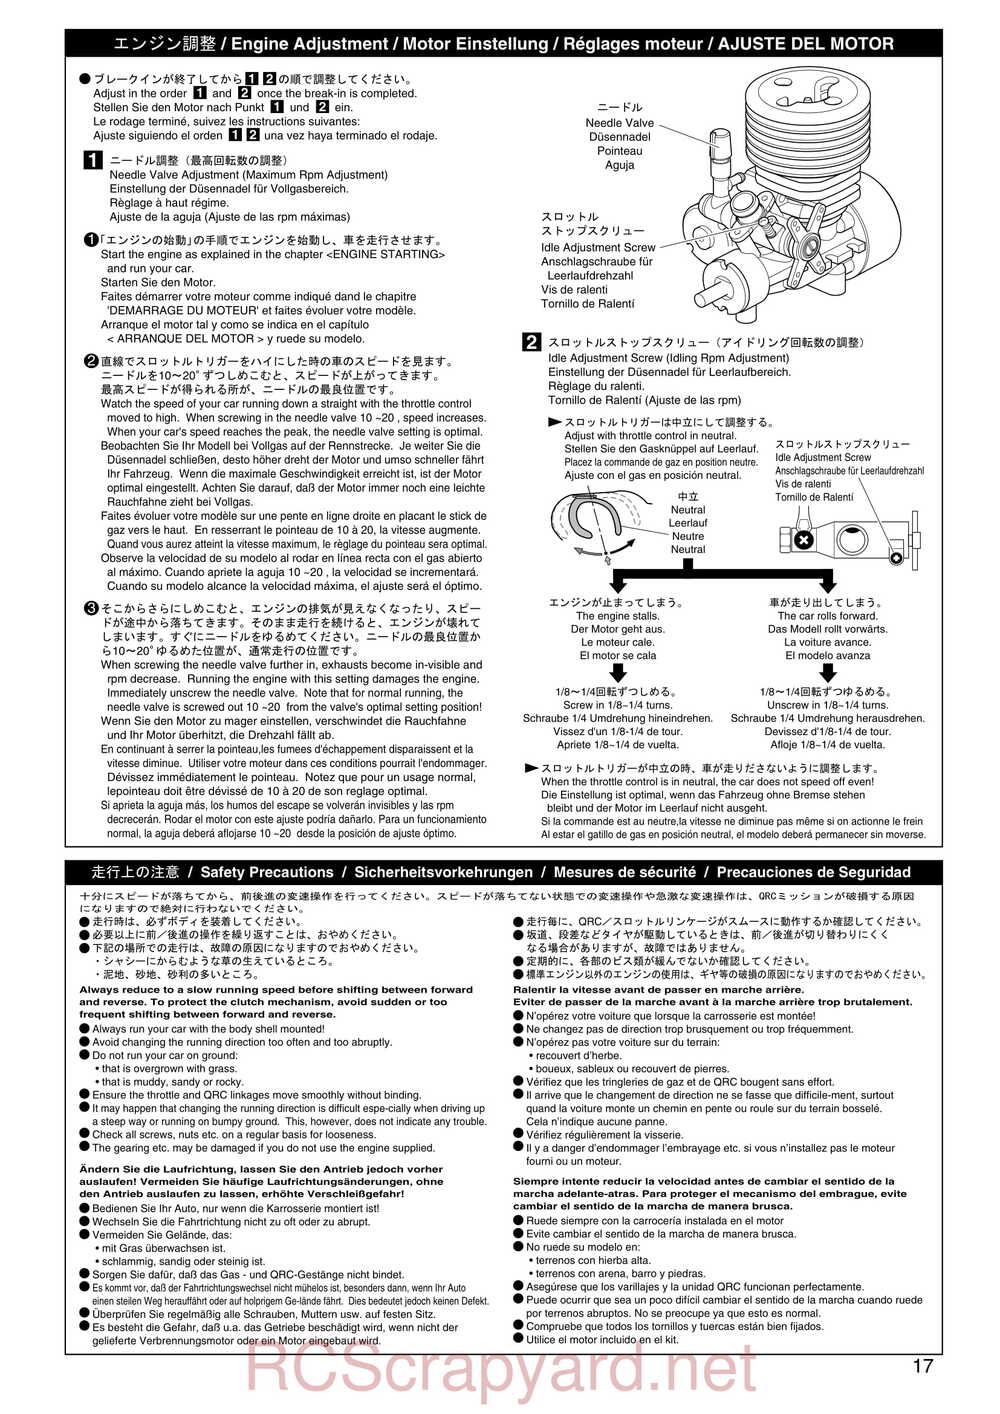 Kyosho - 31181 - Mega-Force - Manual - Page 17